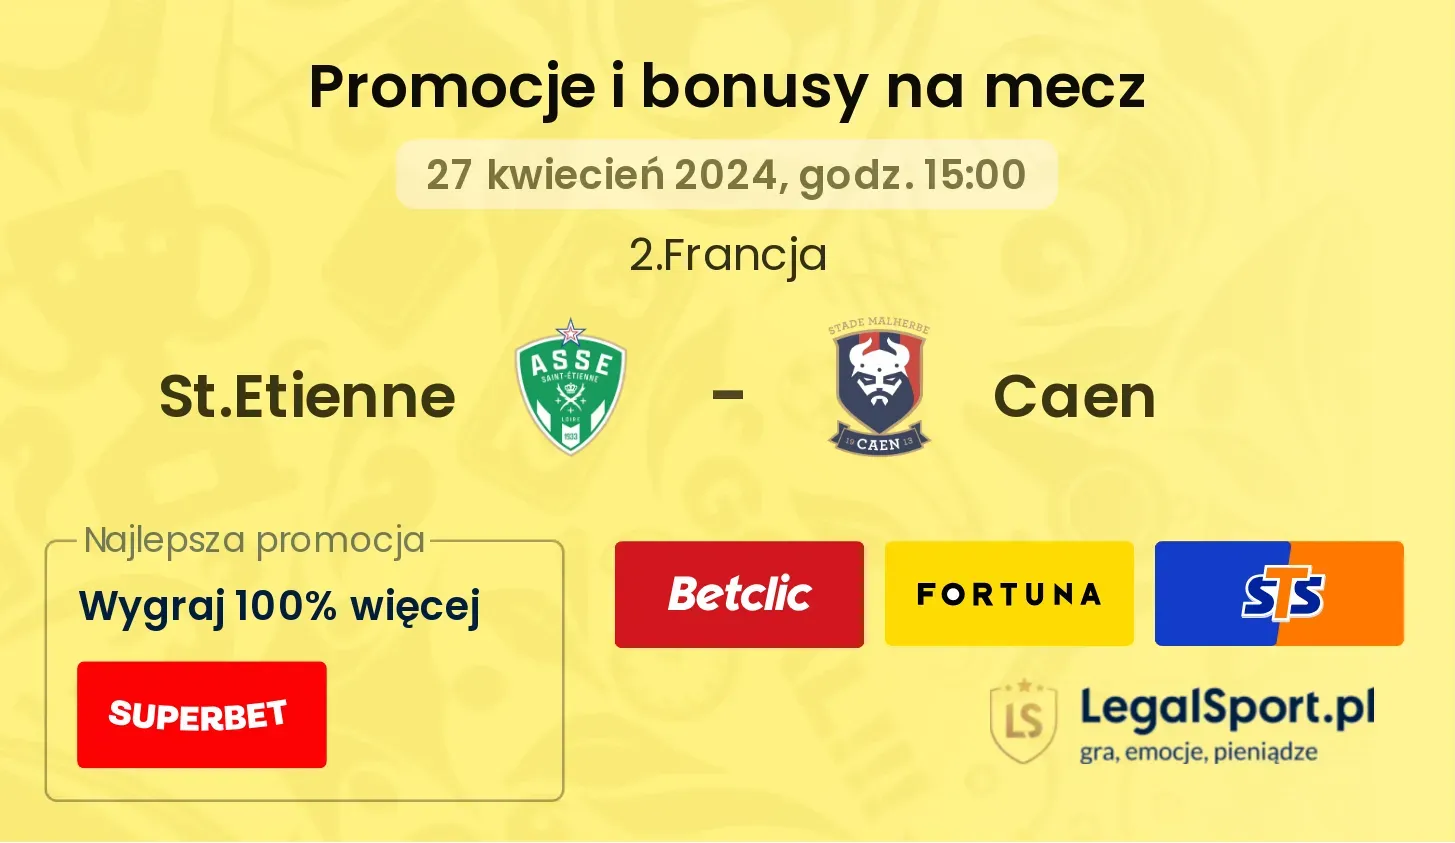 St.Etienne - Caen promocje bonusy na mecz